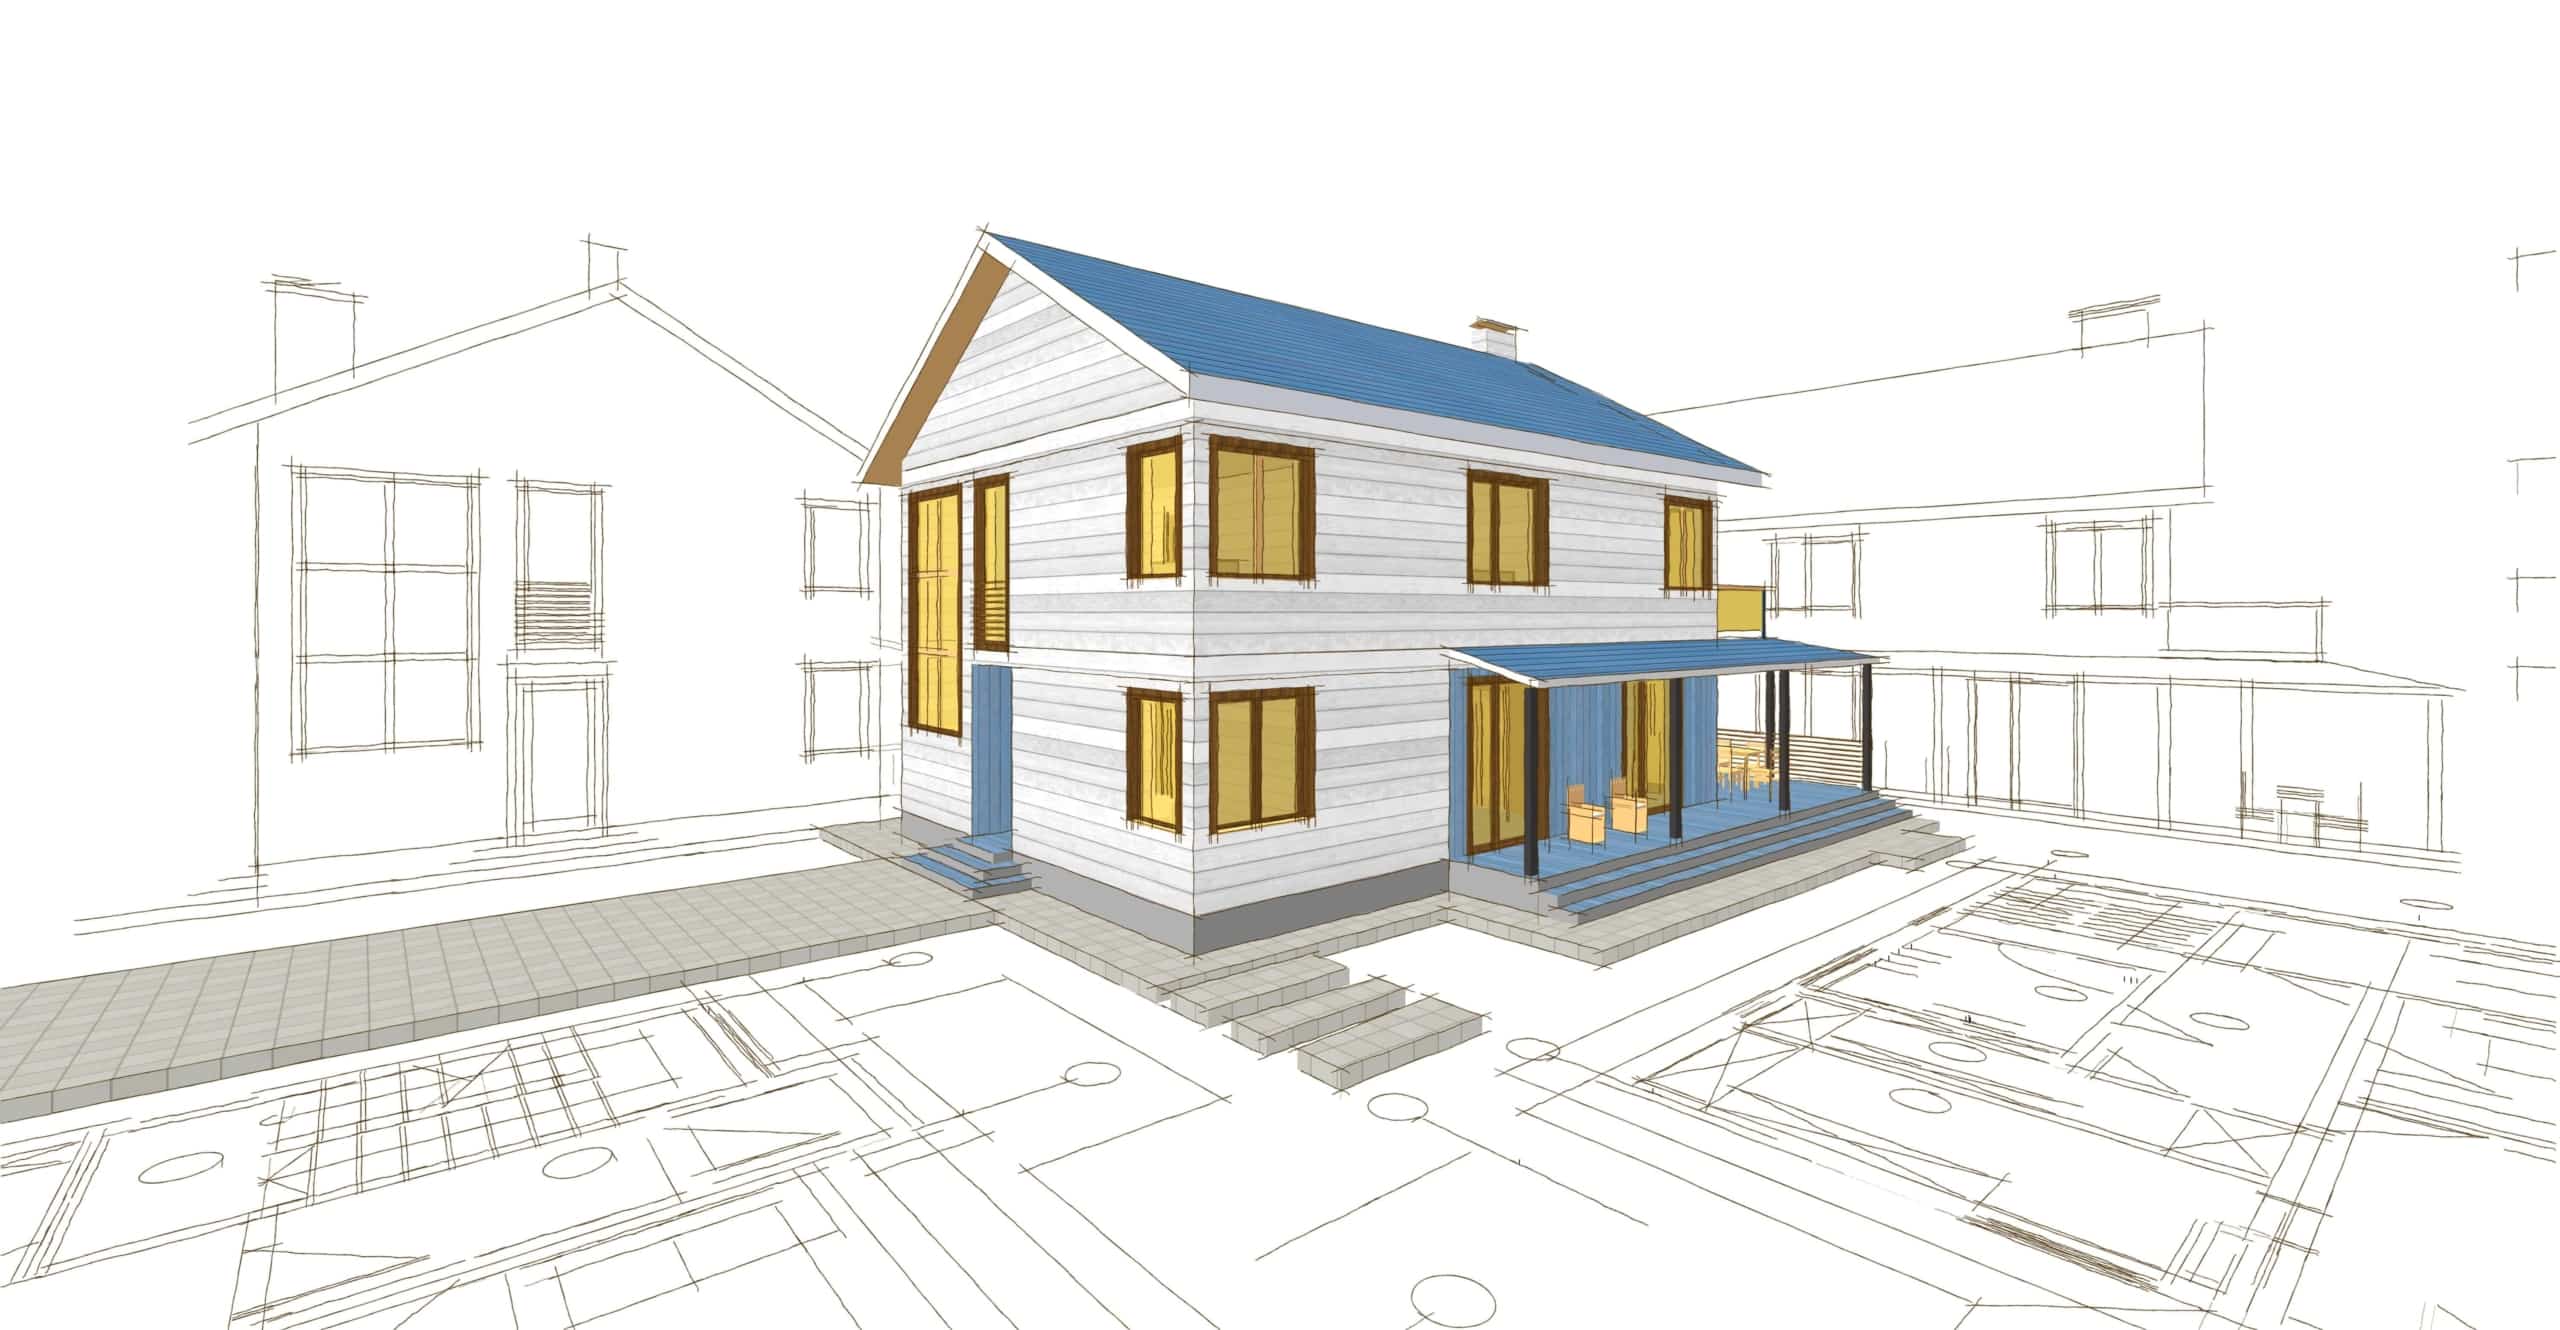 Residential design build concept for a home in Denver, Colorado.